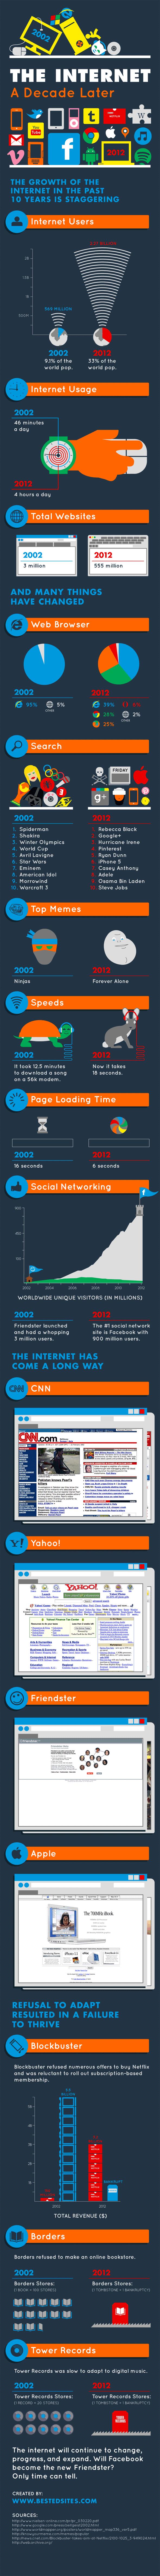 Infographie : Internet 2002 vs Internet 2012